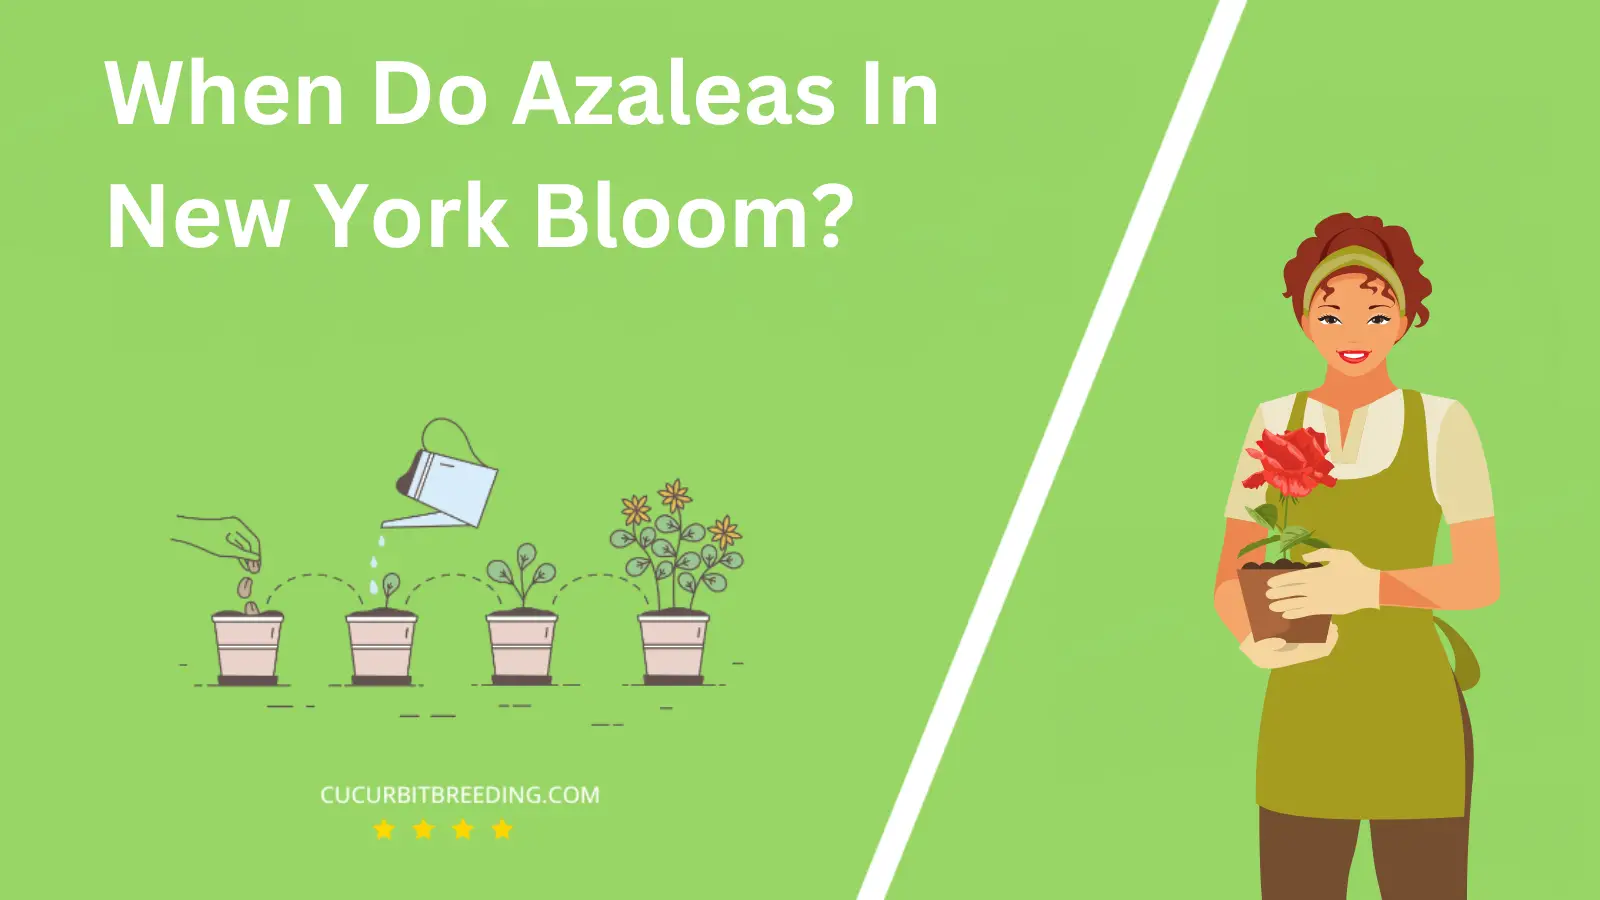 When Do Azaleas In New York Bloom?